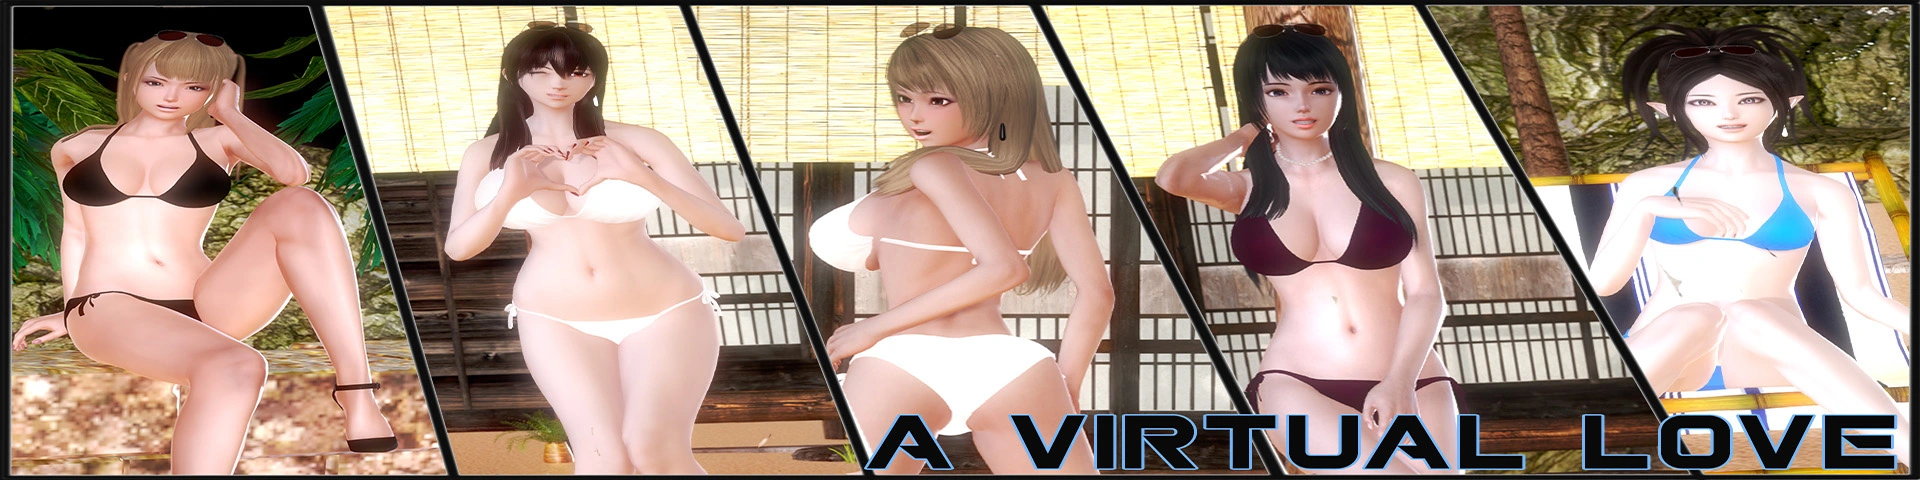 A Virtual Love [v0.1] main image